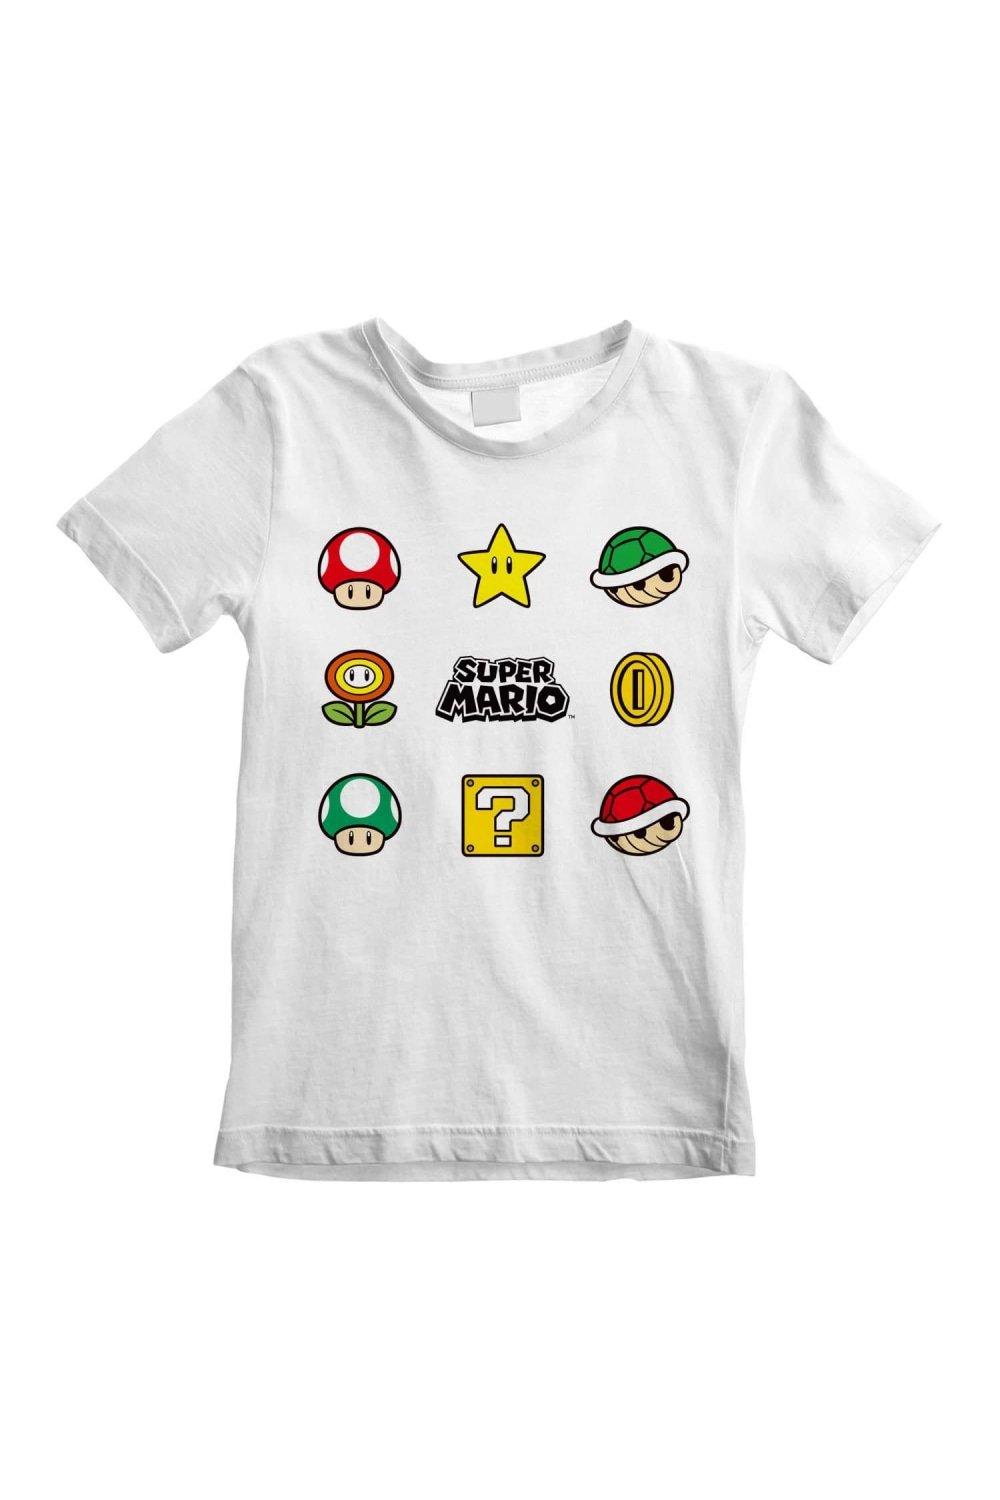 Items Logo T-Shirt